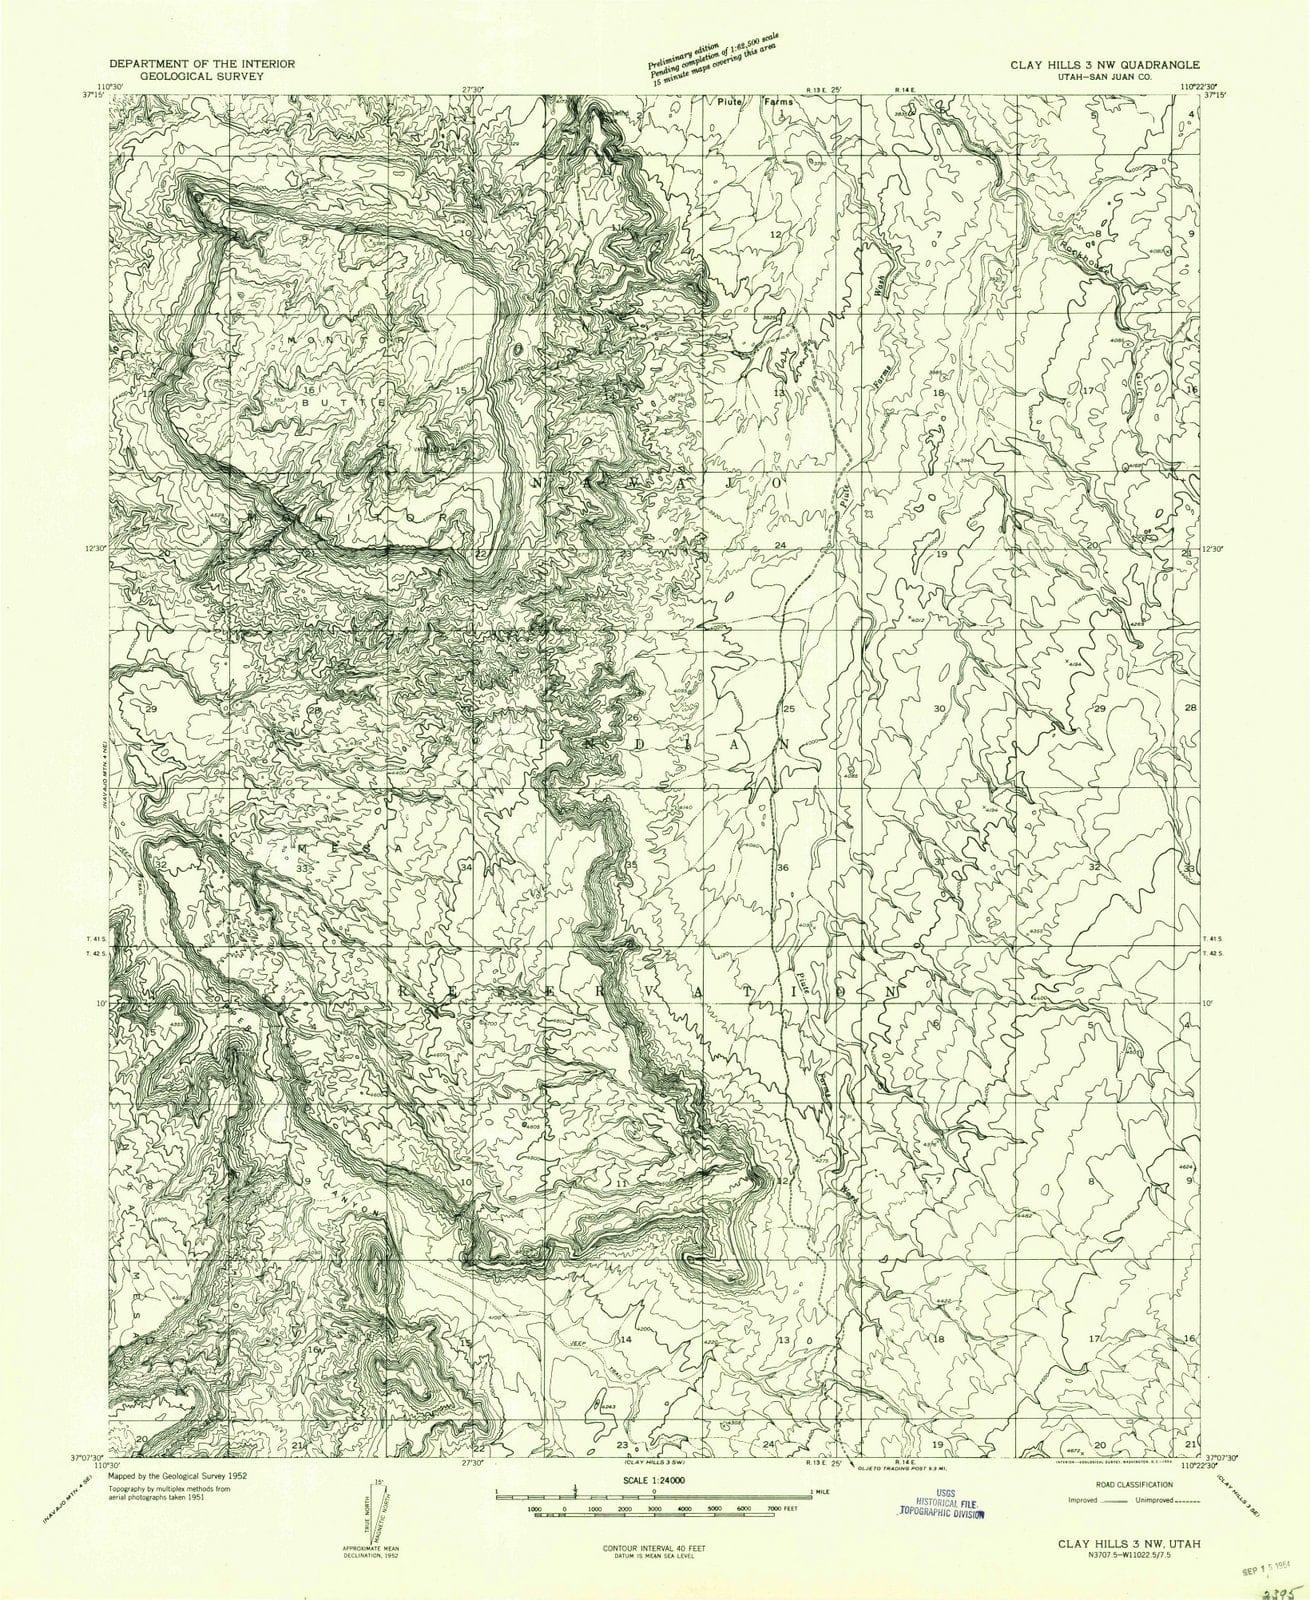 1952 Clay Hills 3, UT - Utah - USGS Topographic Map